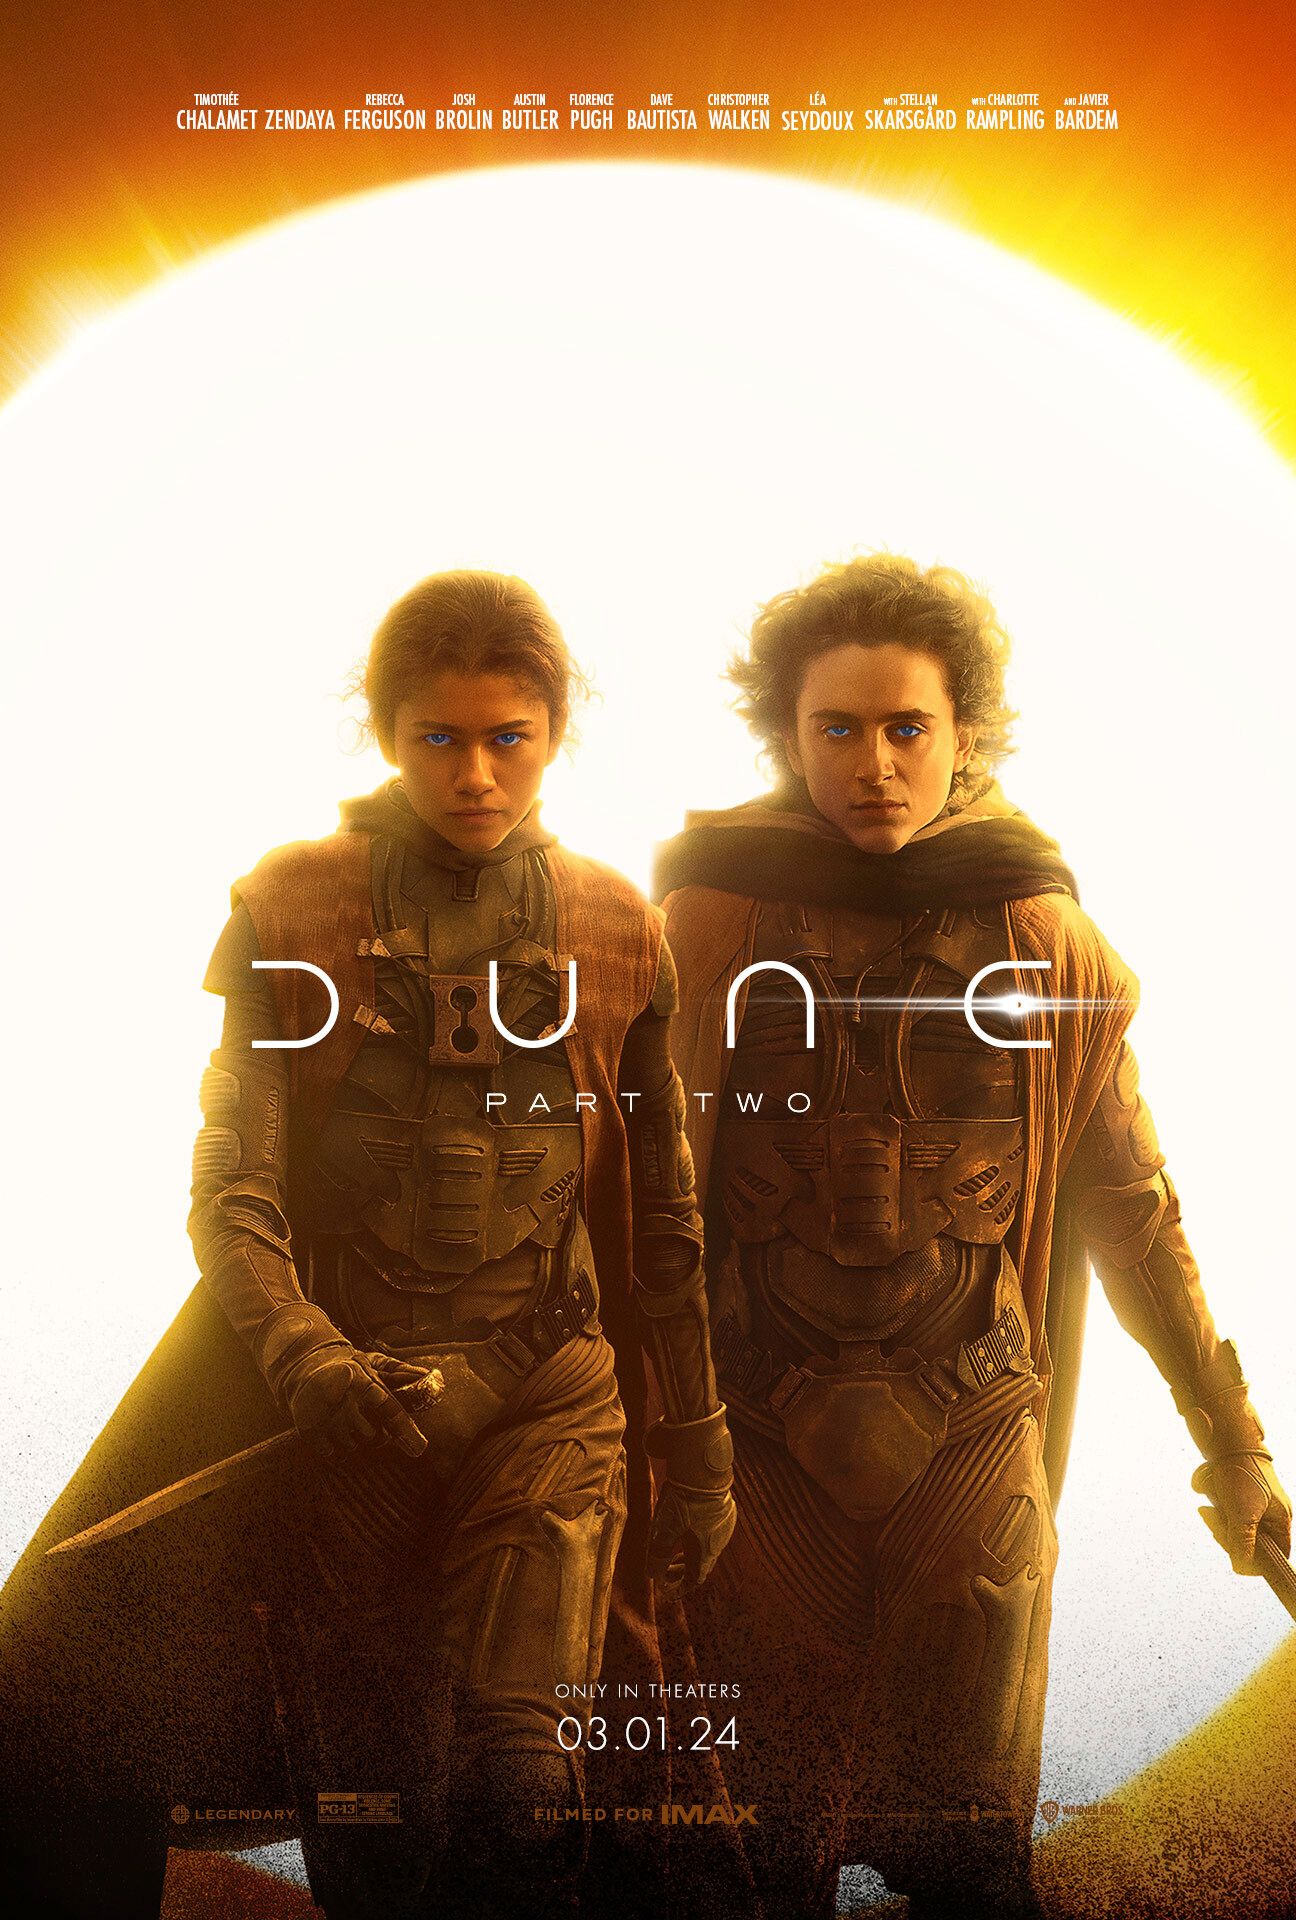 Dune Part 2 poster showing Timothée Chalamet as Paul Atréides and Zendaya as Chani holding daggers